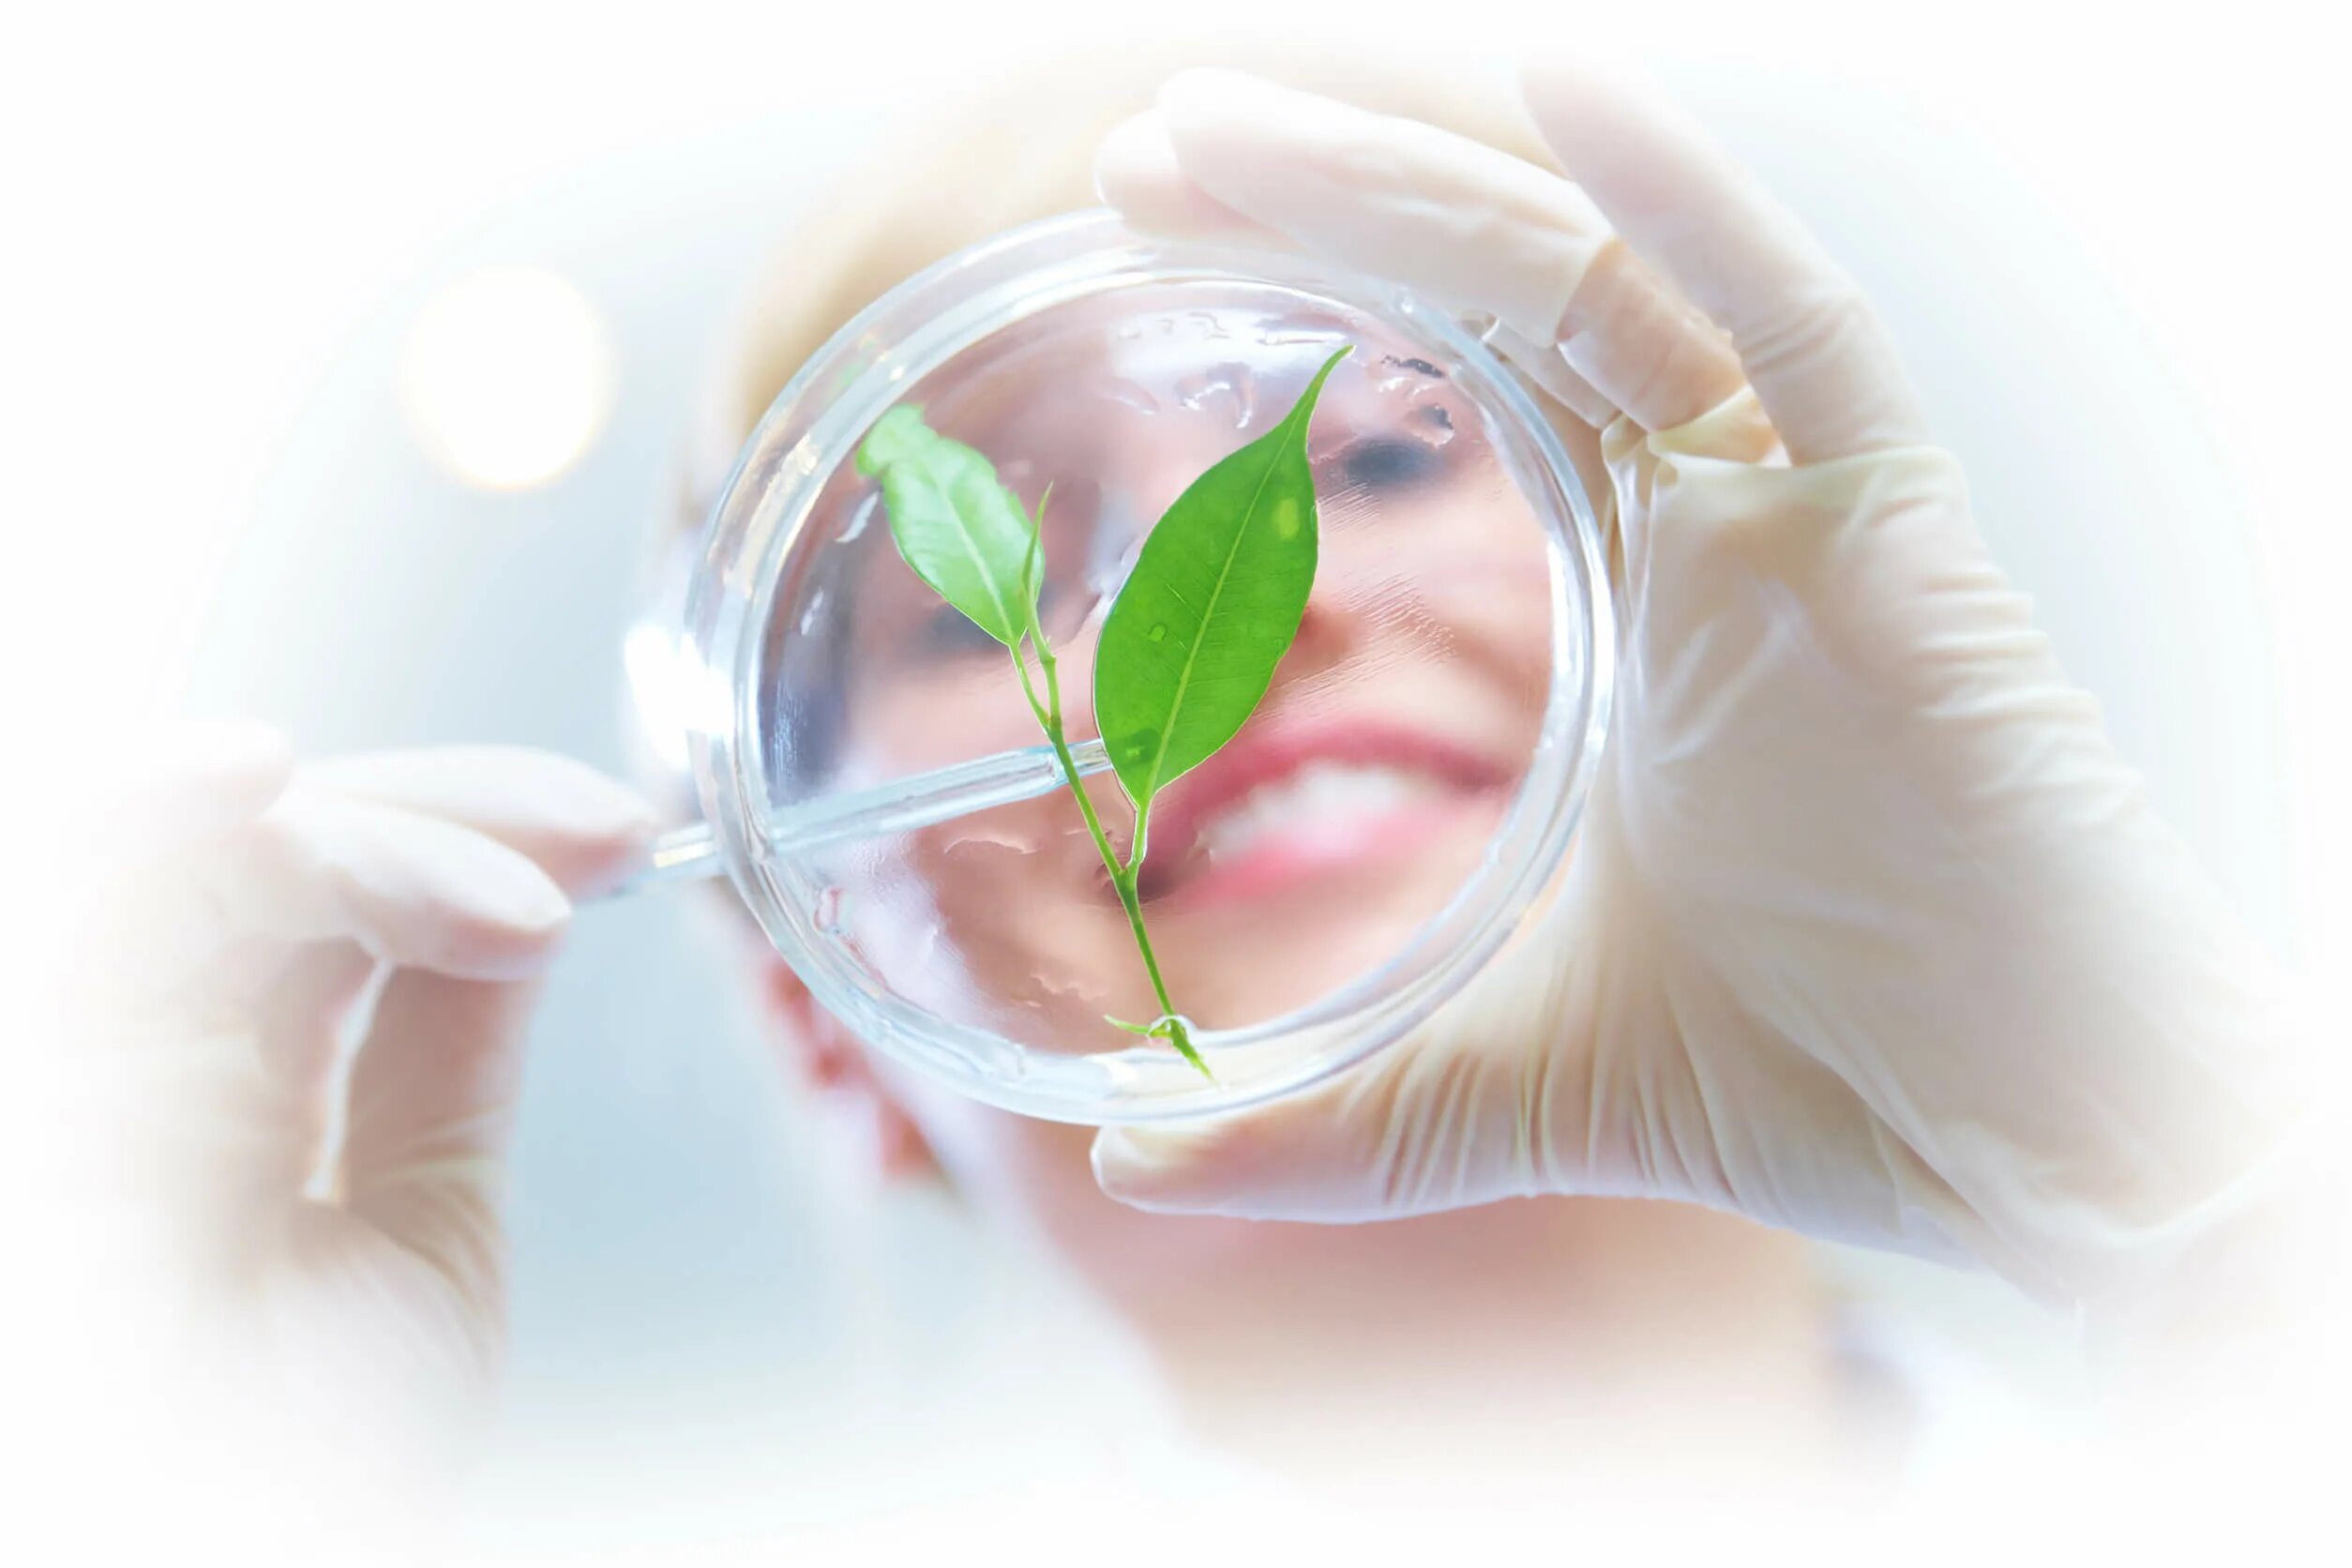 6 биотехнология. Биотехнология растений. Биоинженерия растений. Биотехнологии в экологии. Биотехнологические объекты.